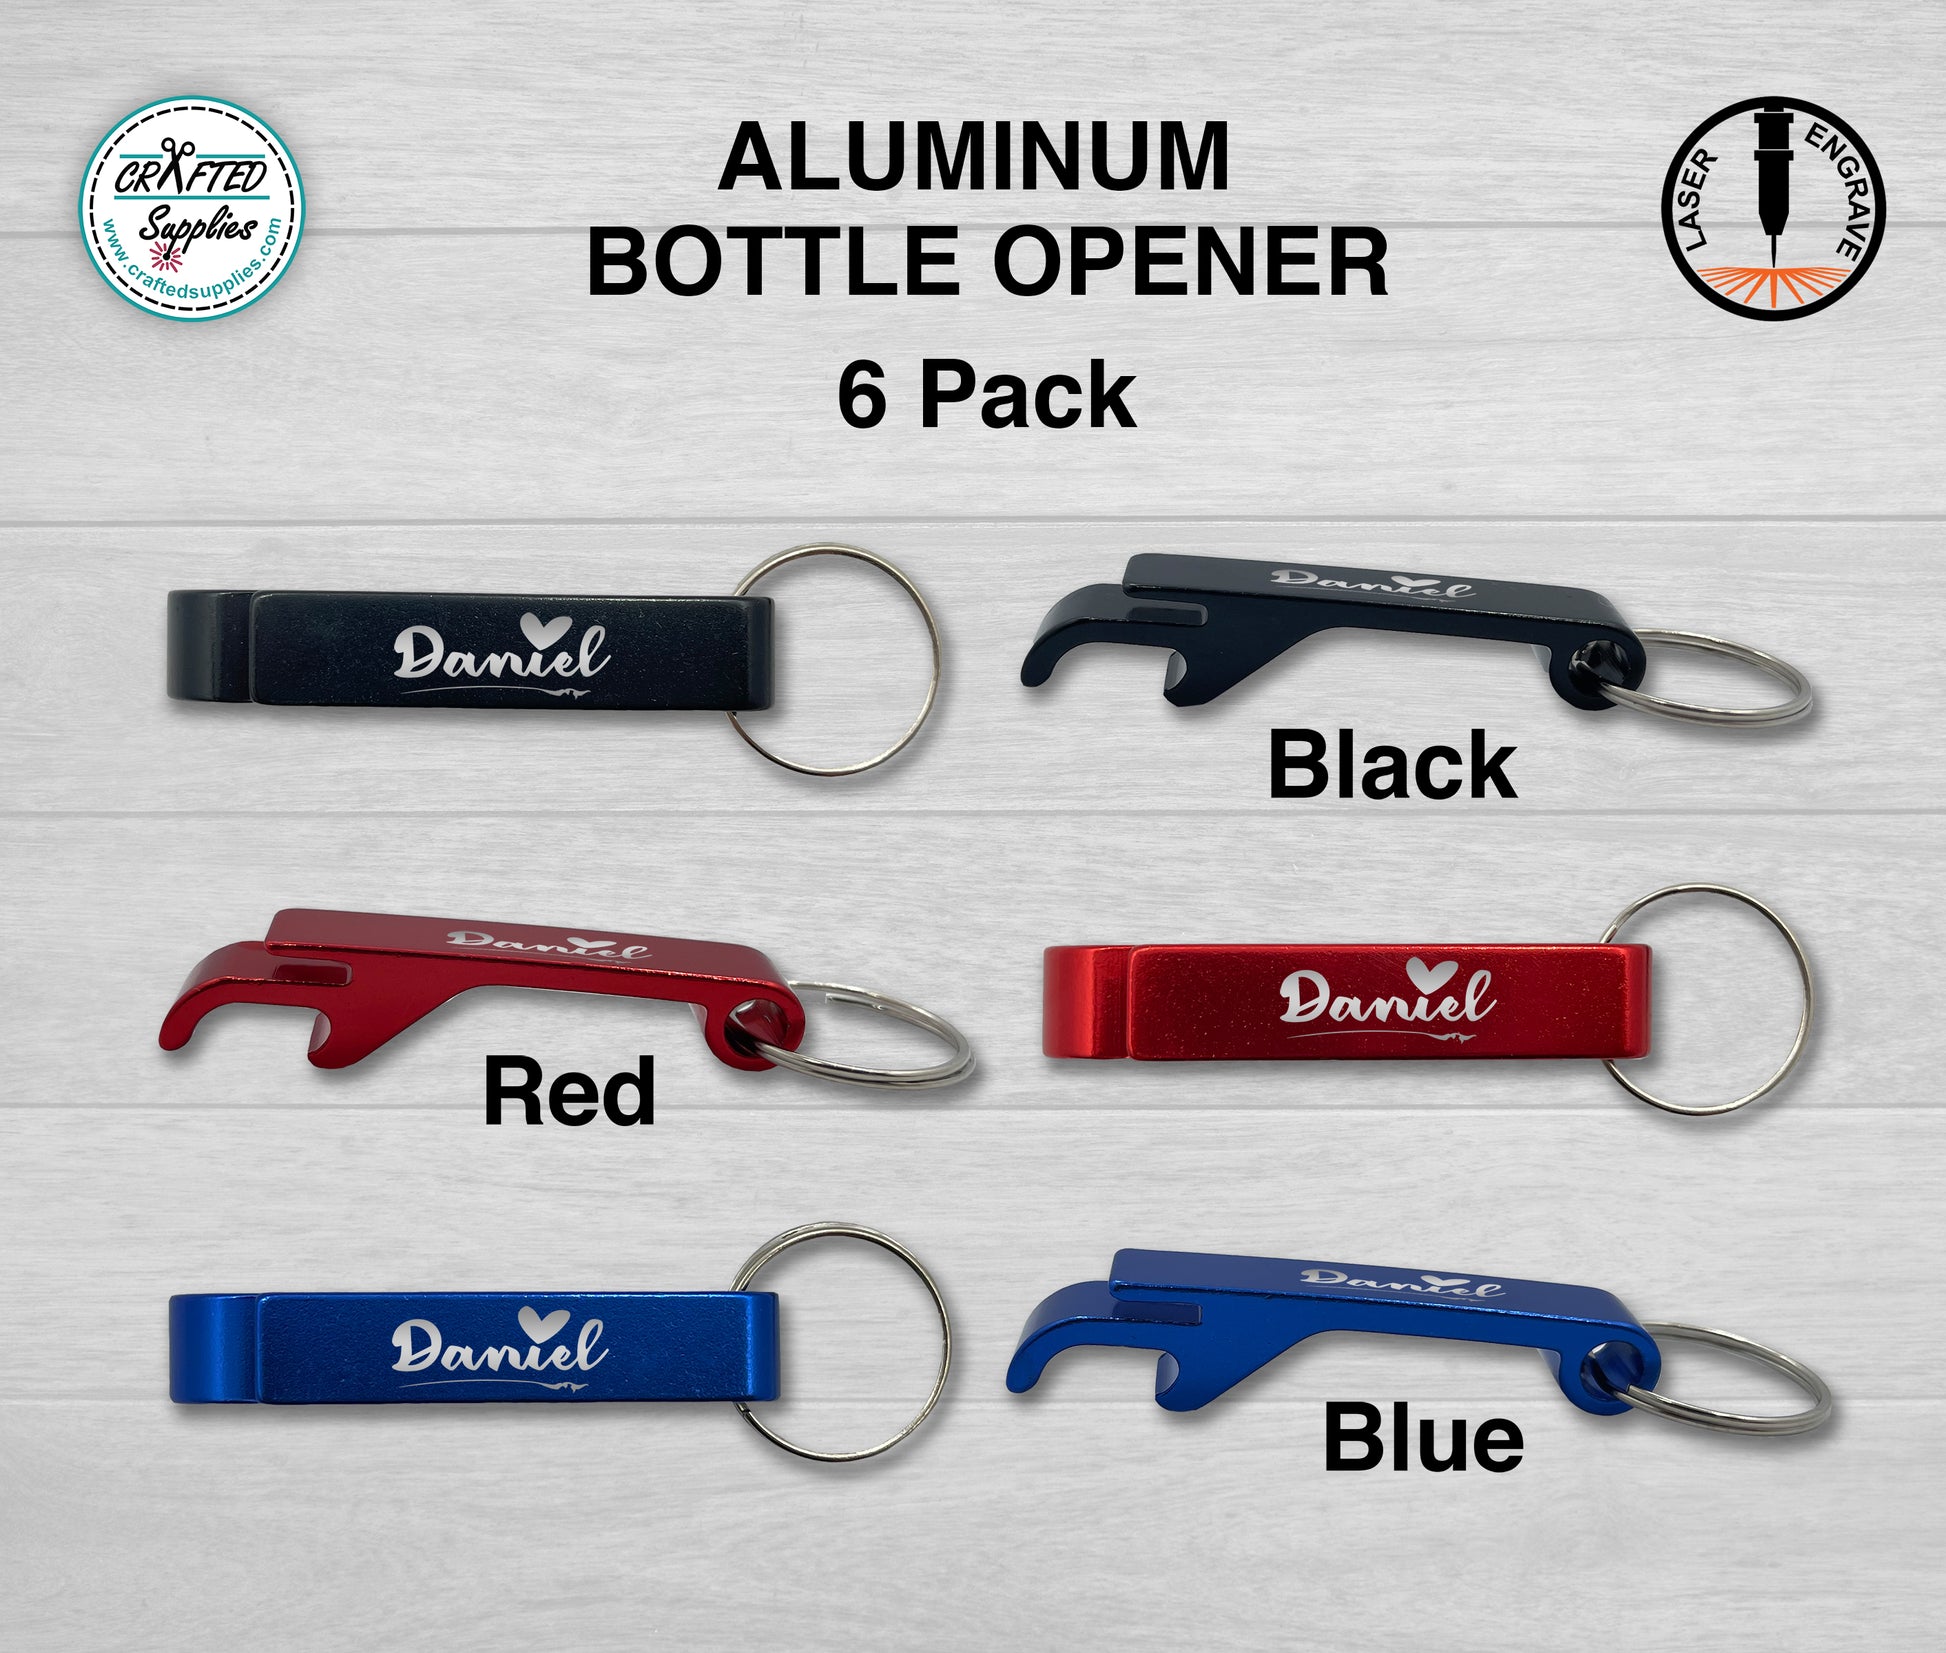 Claw bottle opener, anodized aluminum